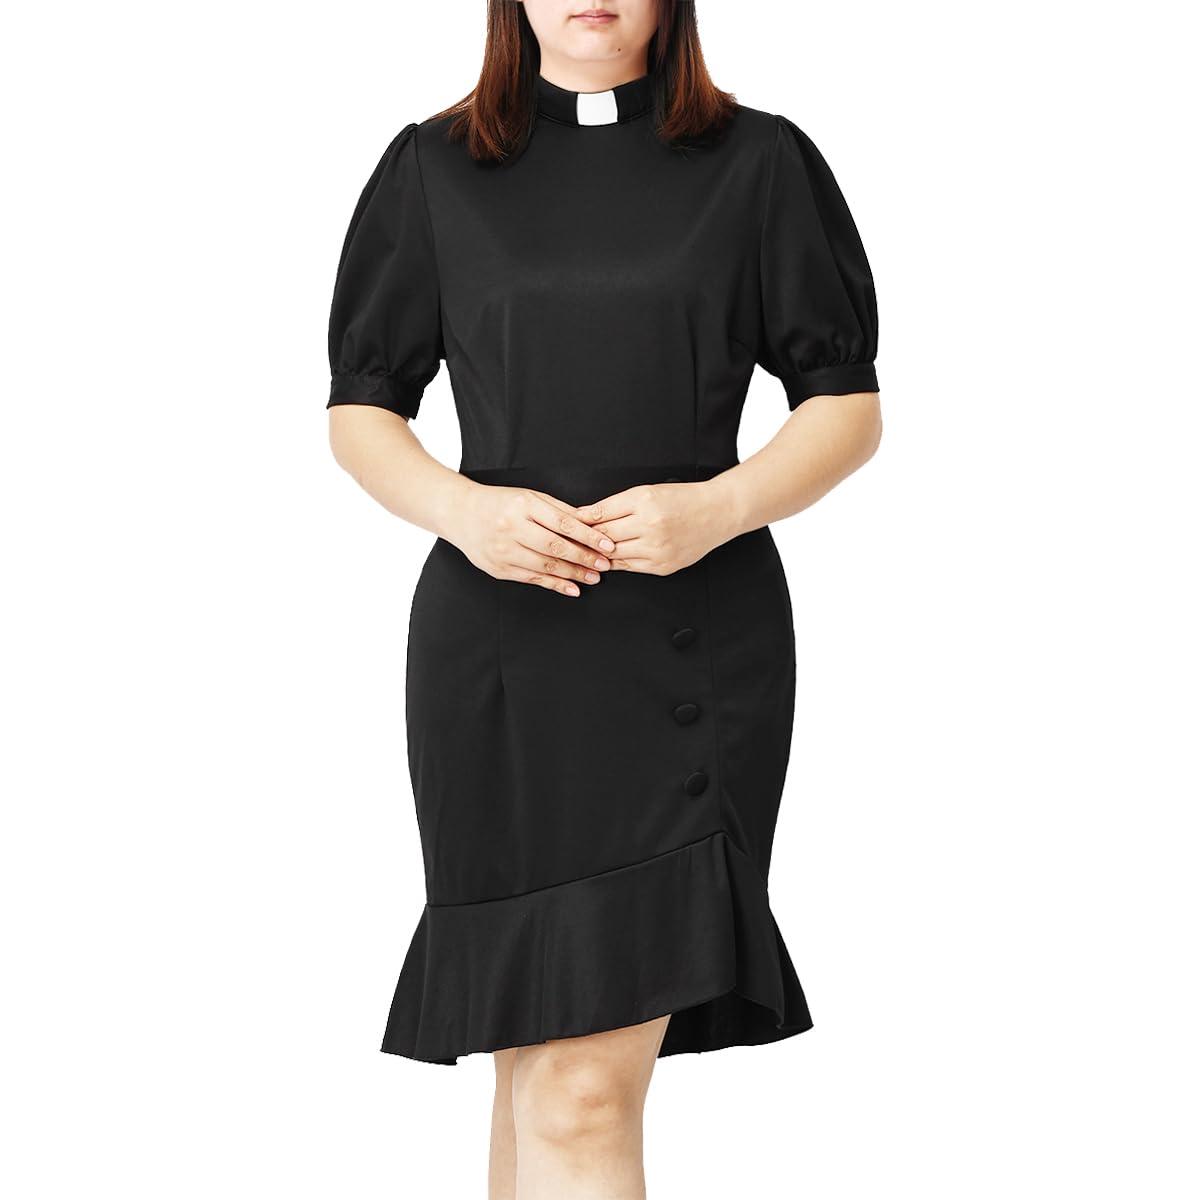 COSDREAMER Christian Catholic Church Womens Clergy Tab Collar Dress Ruffle Hem Bodycon Dress，L Black 0